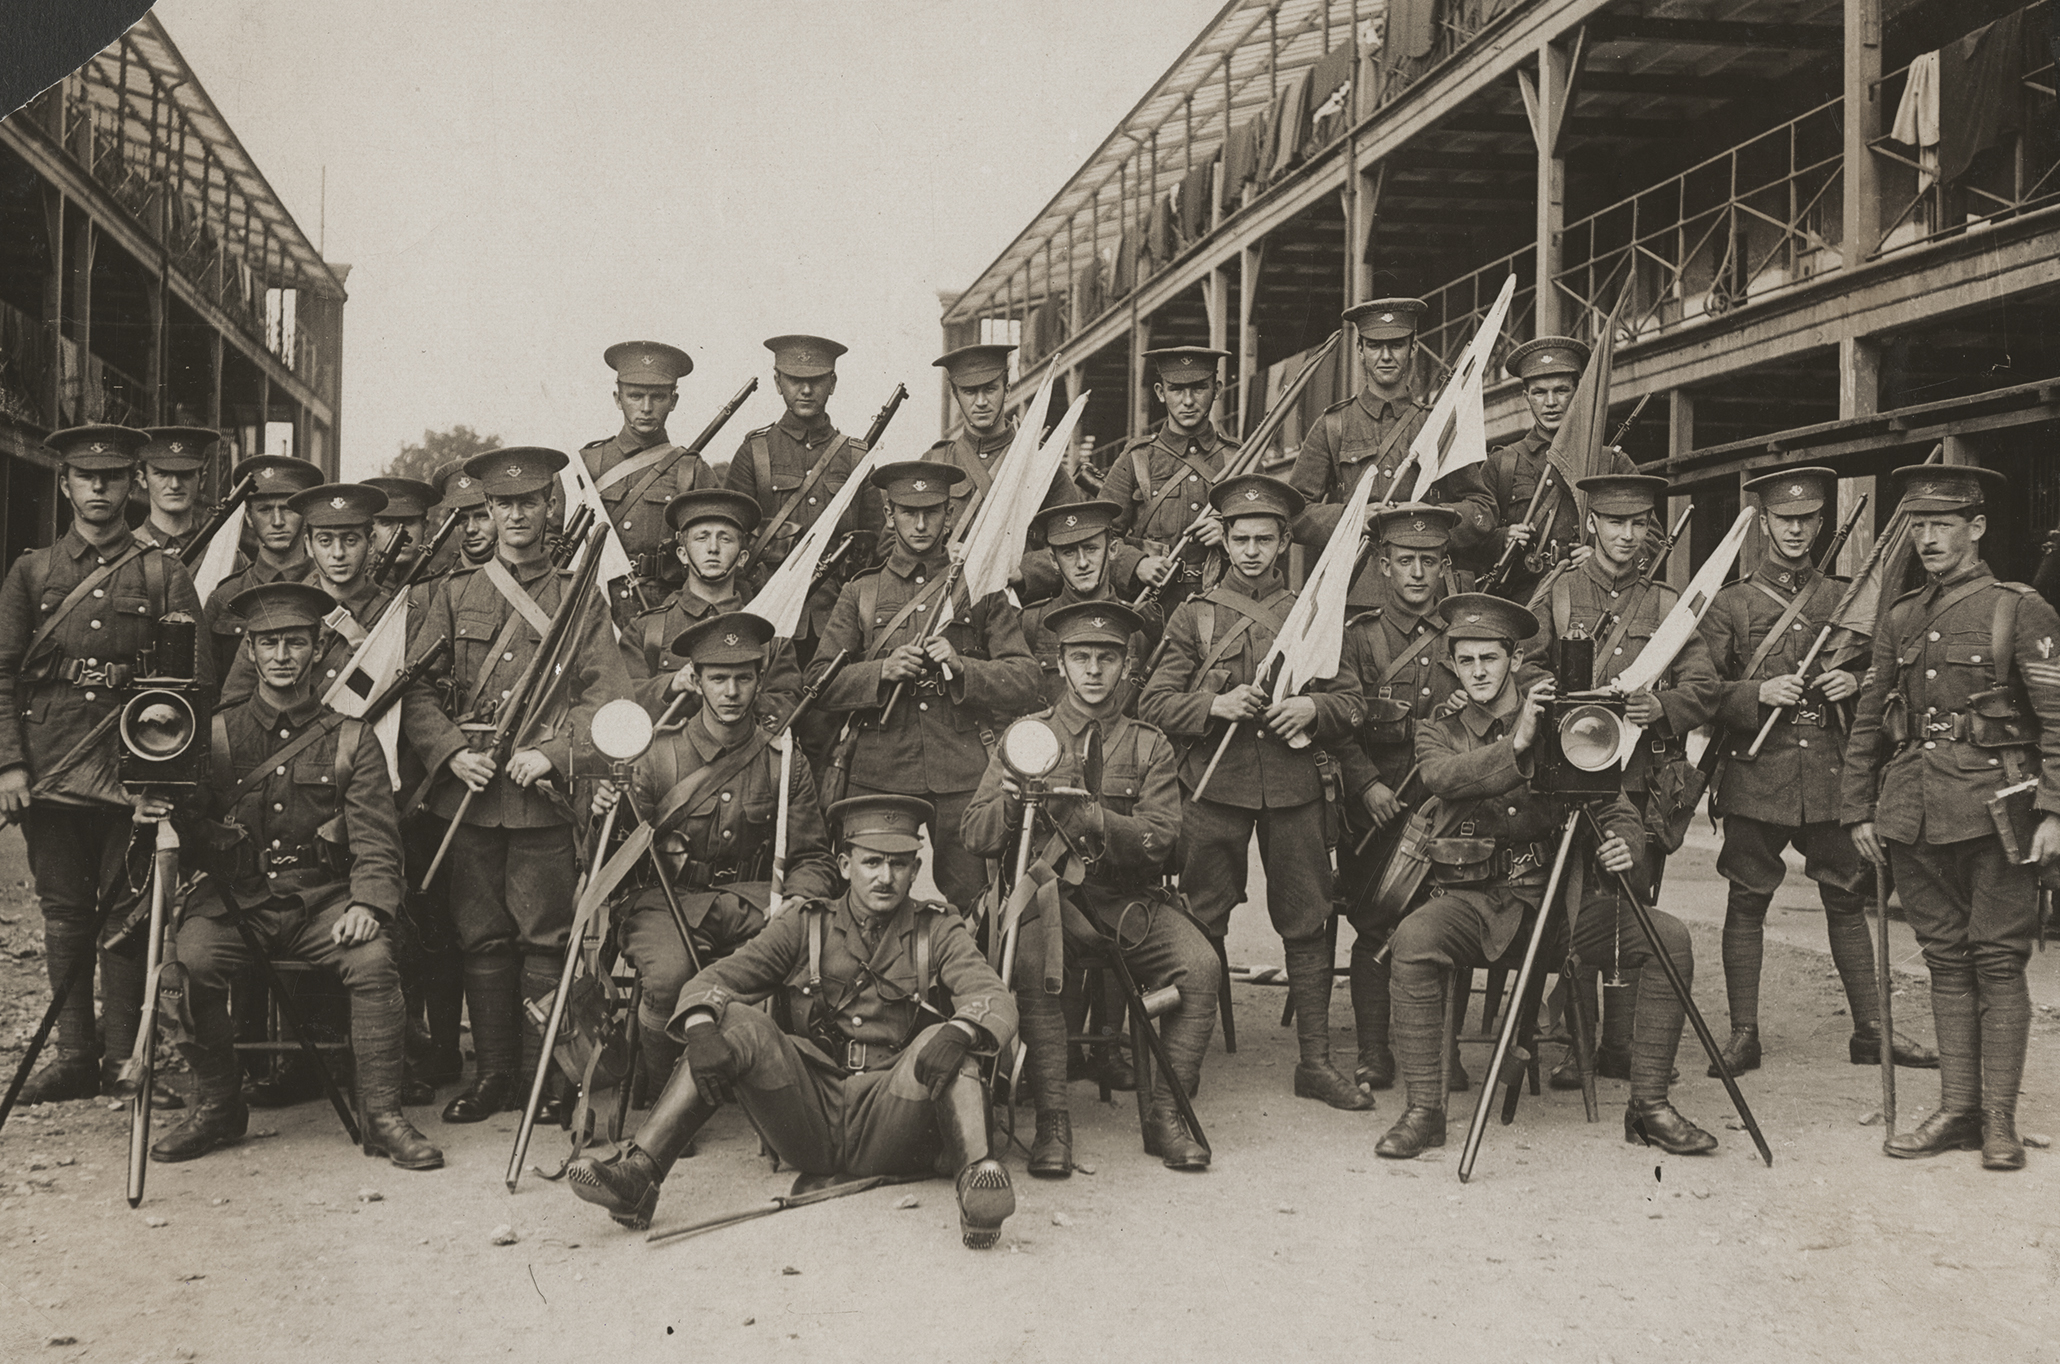 Group Photos, Royal Newfoundland Regiment in the First World War